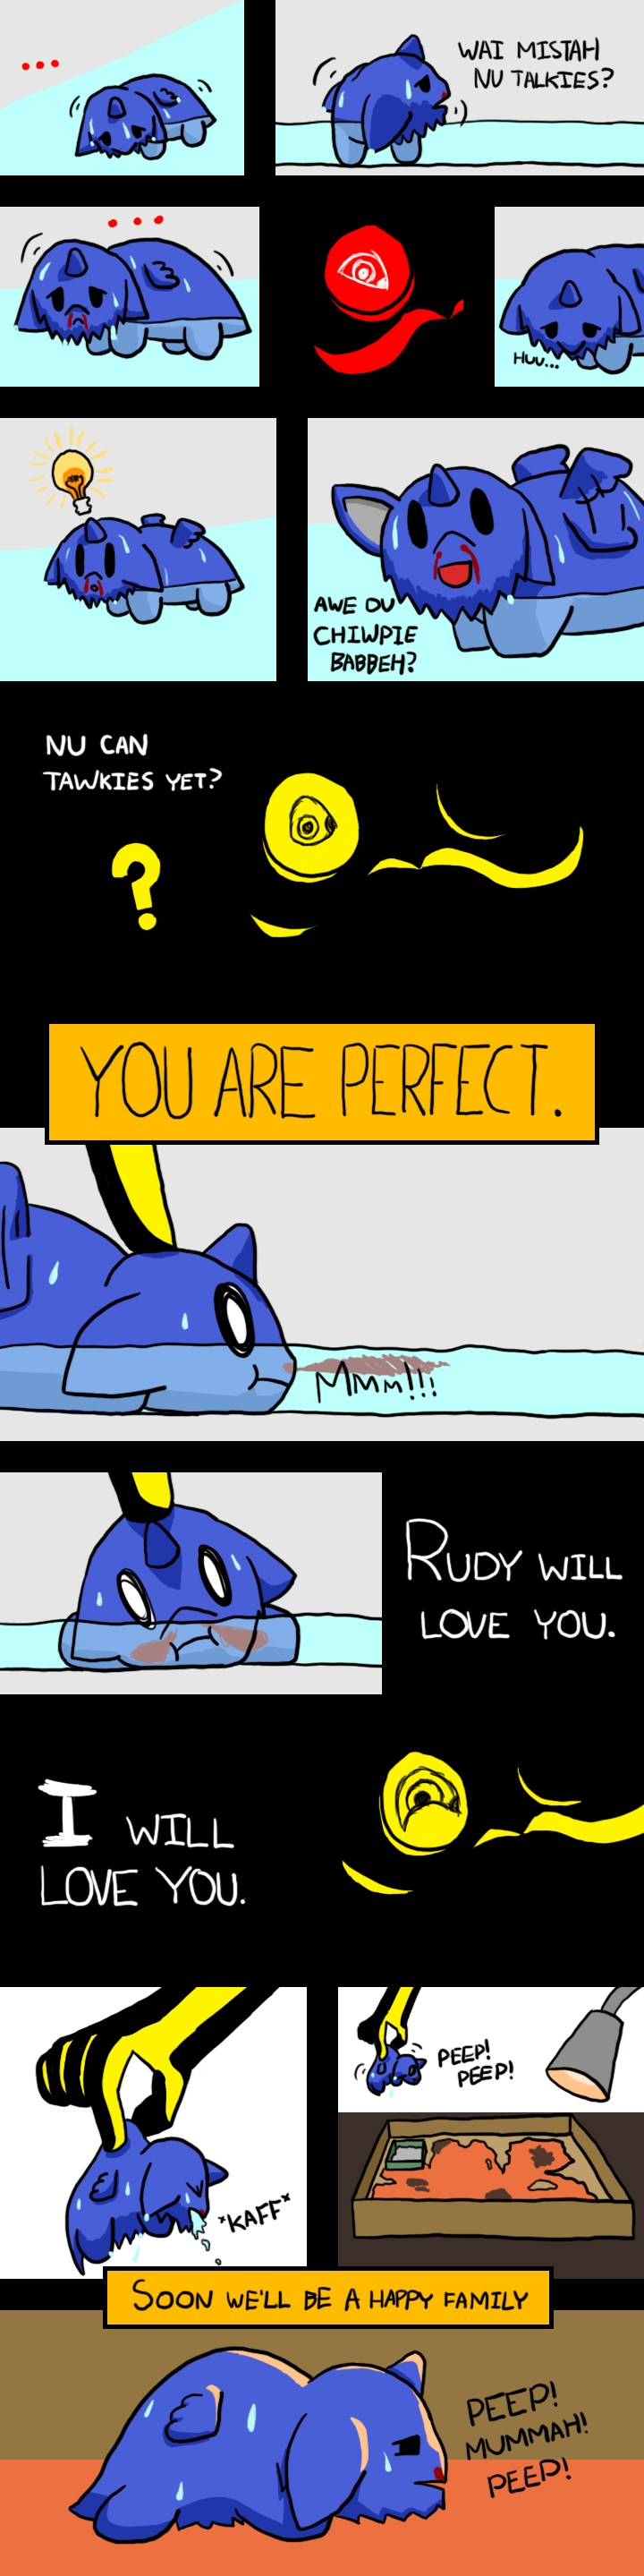 rudy comic 9